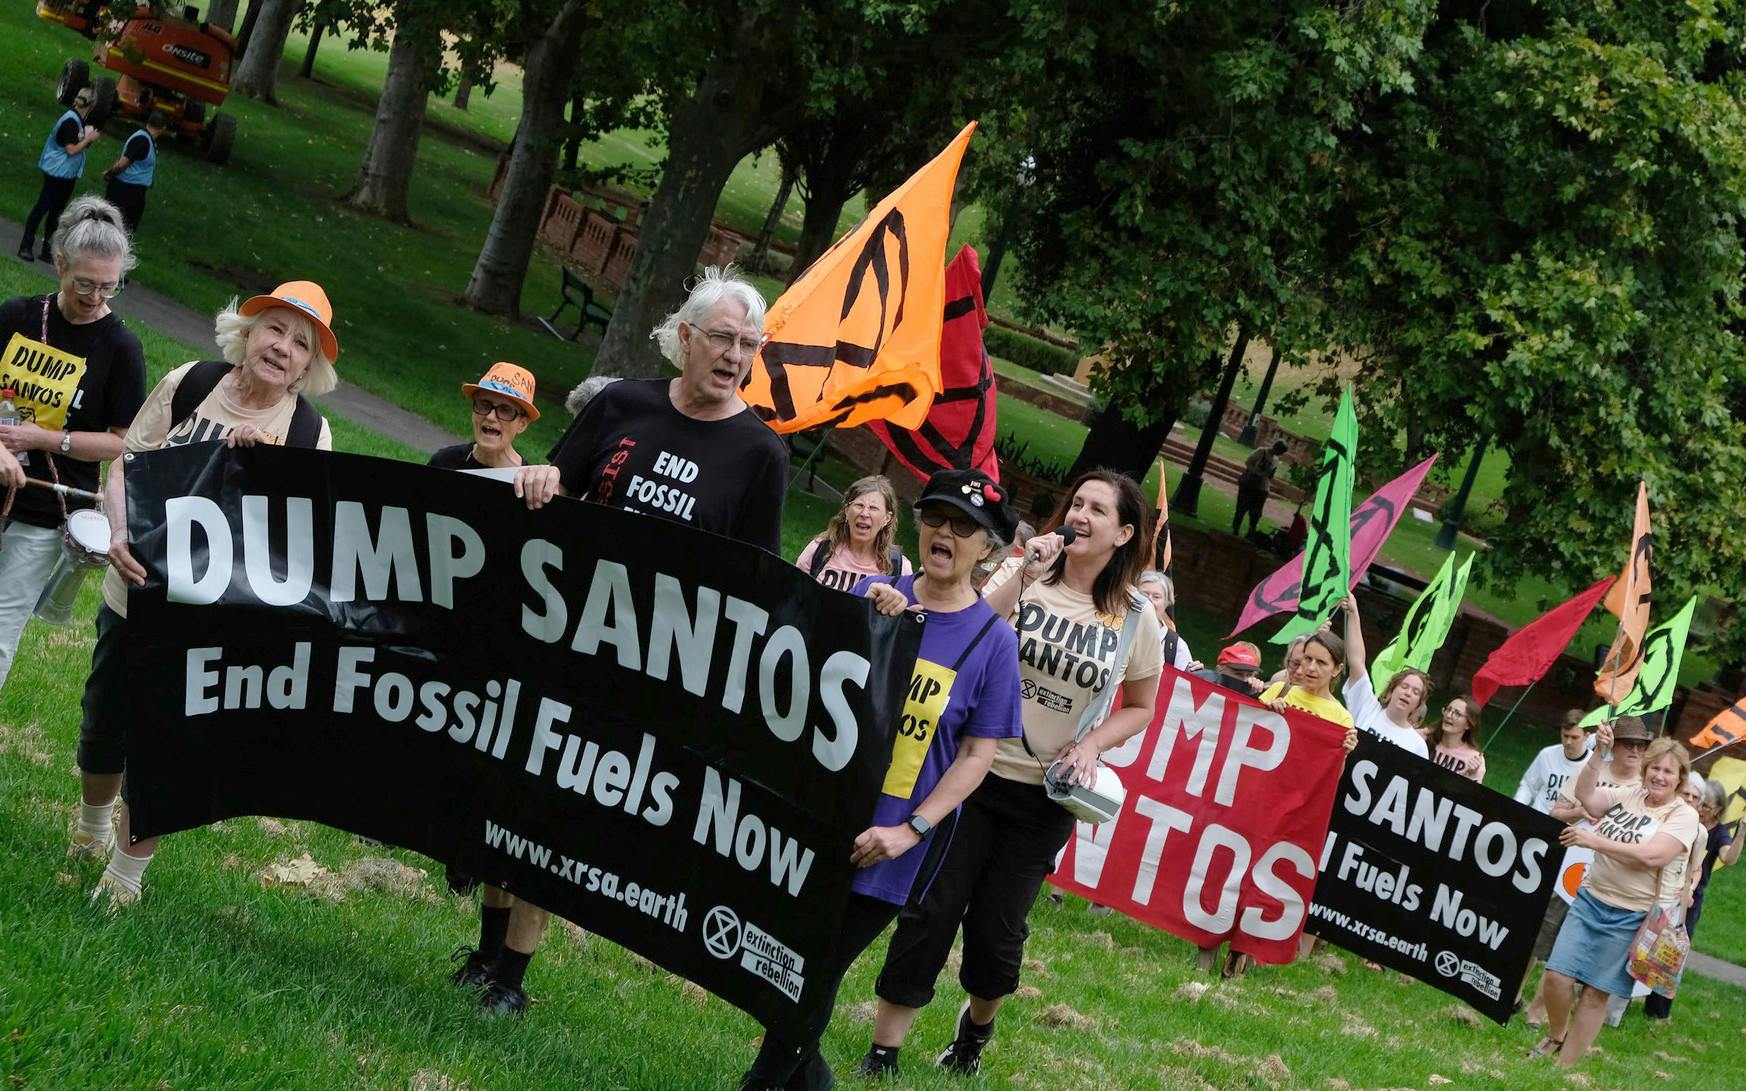 'Dump Santos' rally in Canberra